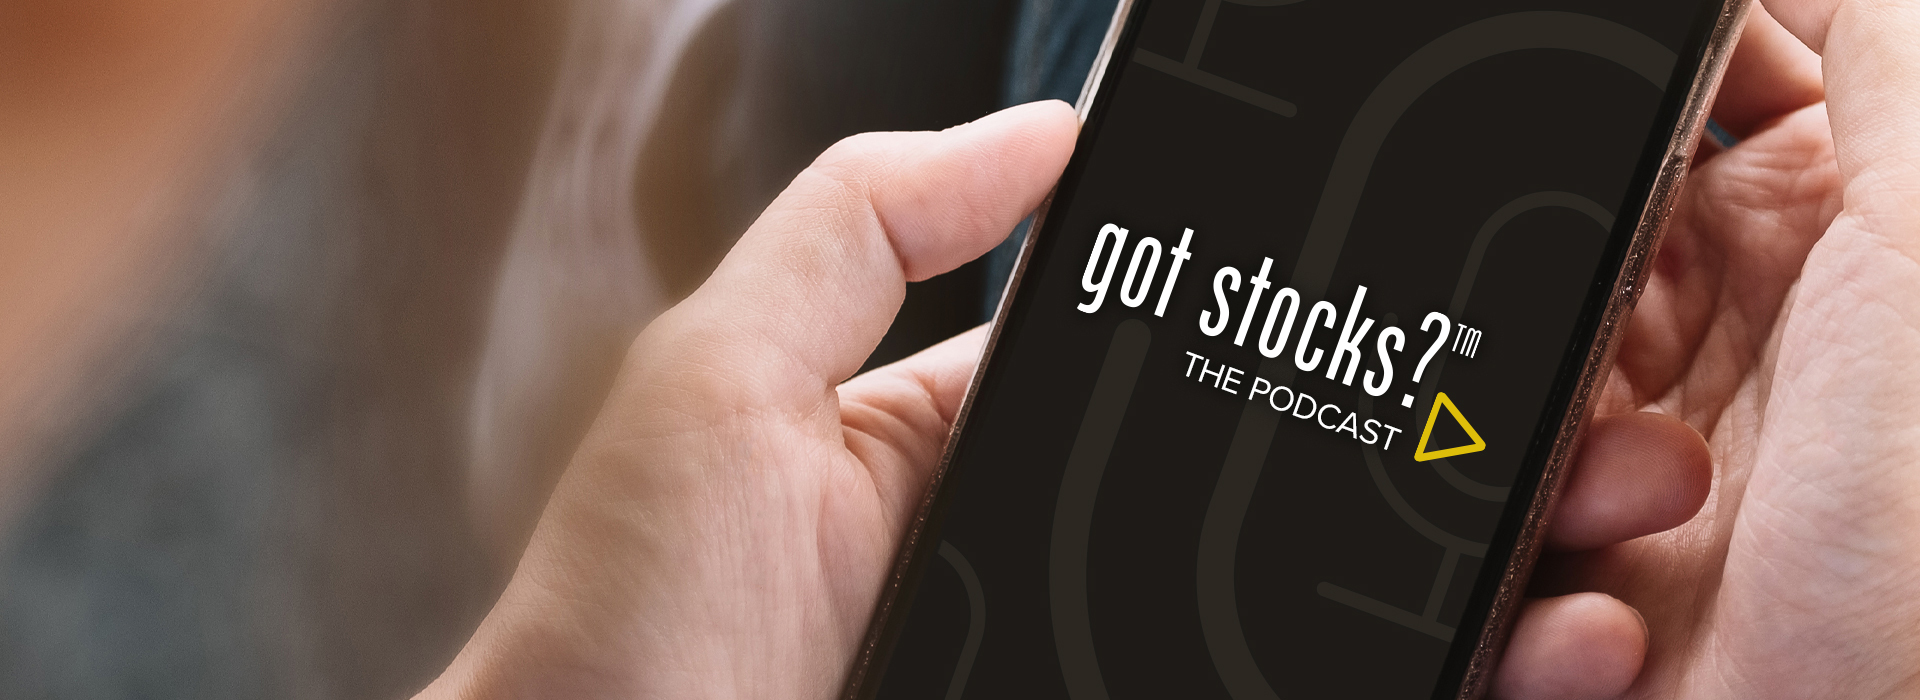 The GotStocks Podcast